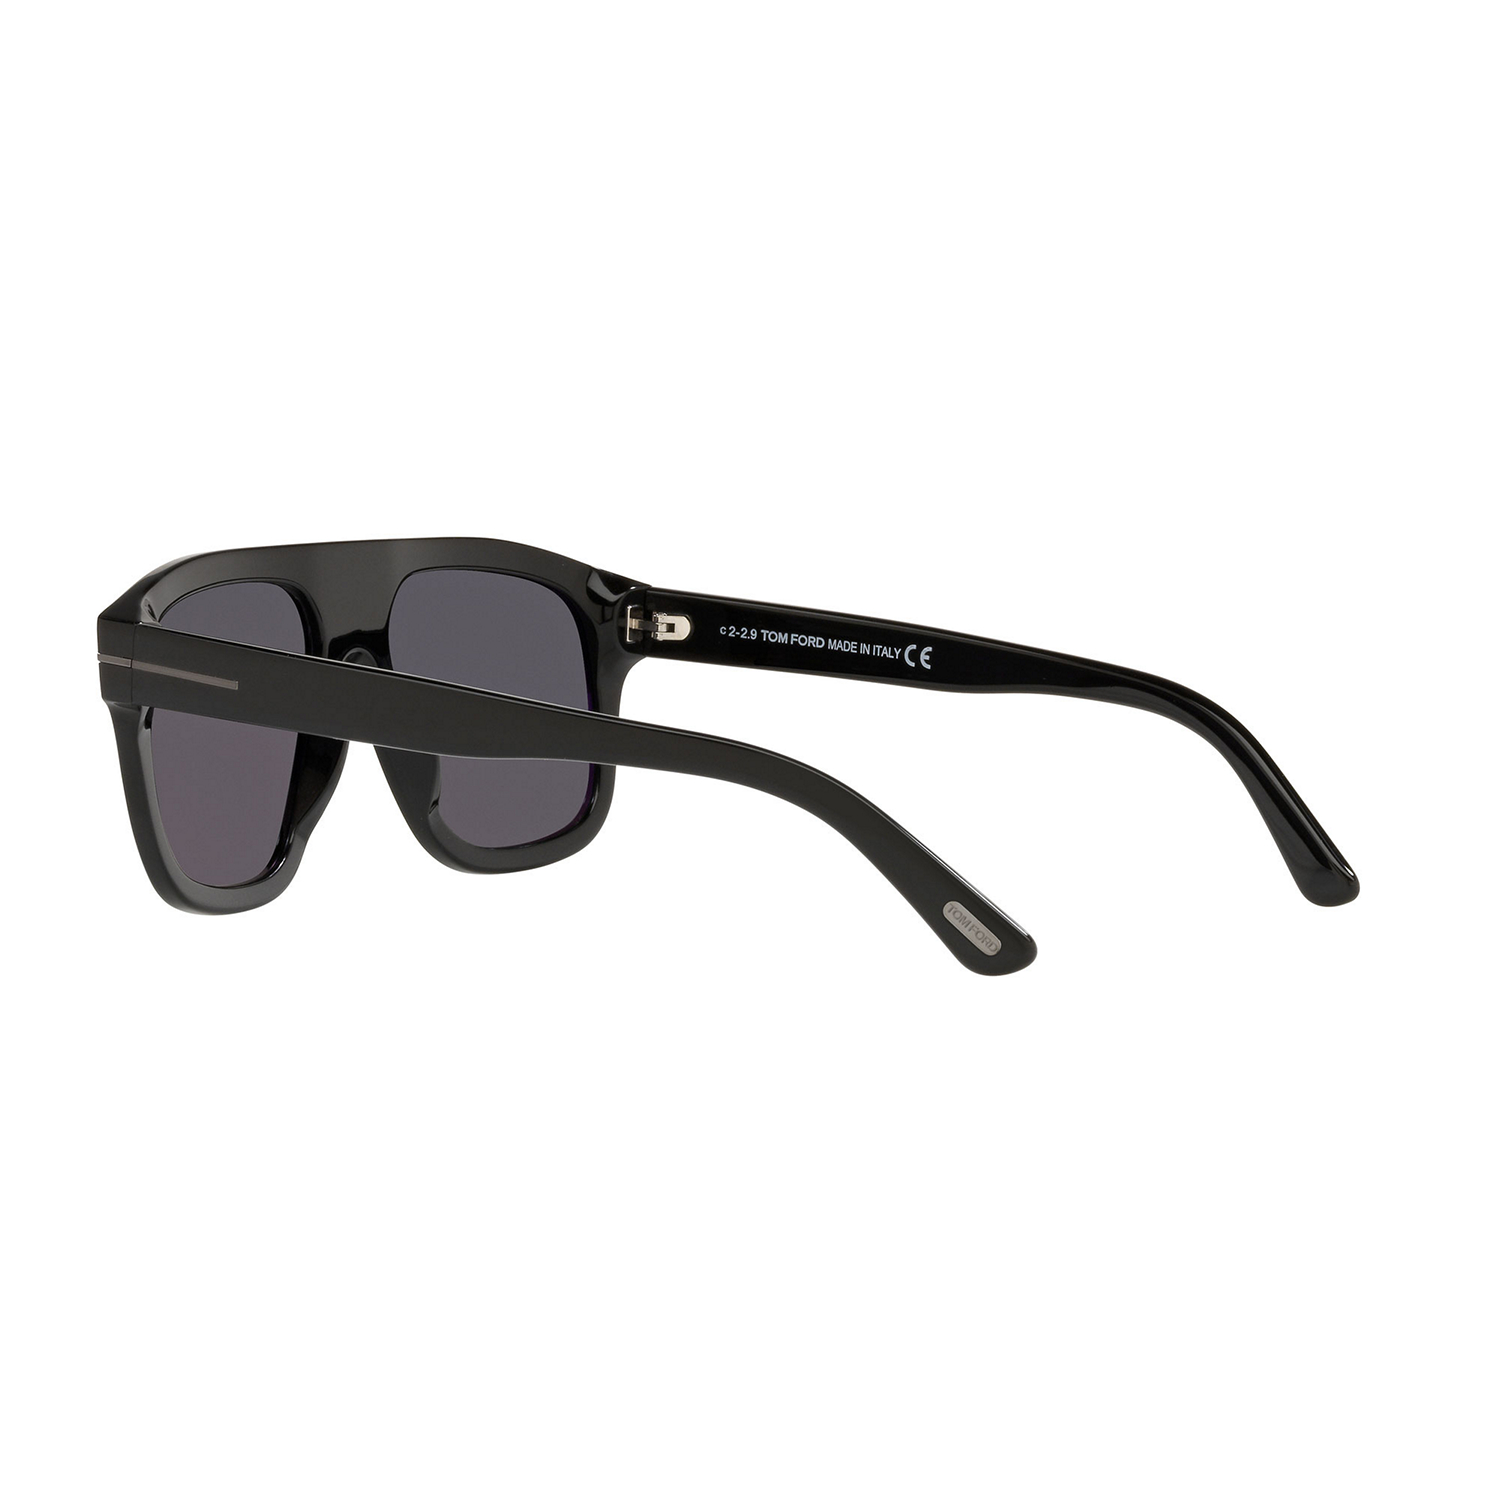 FT0777-N Square Sunglasses